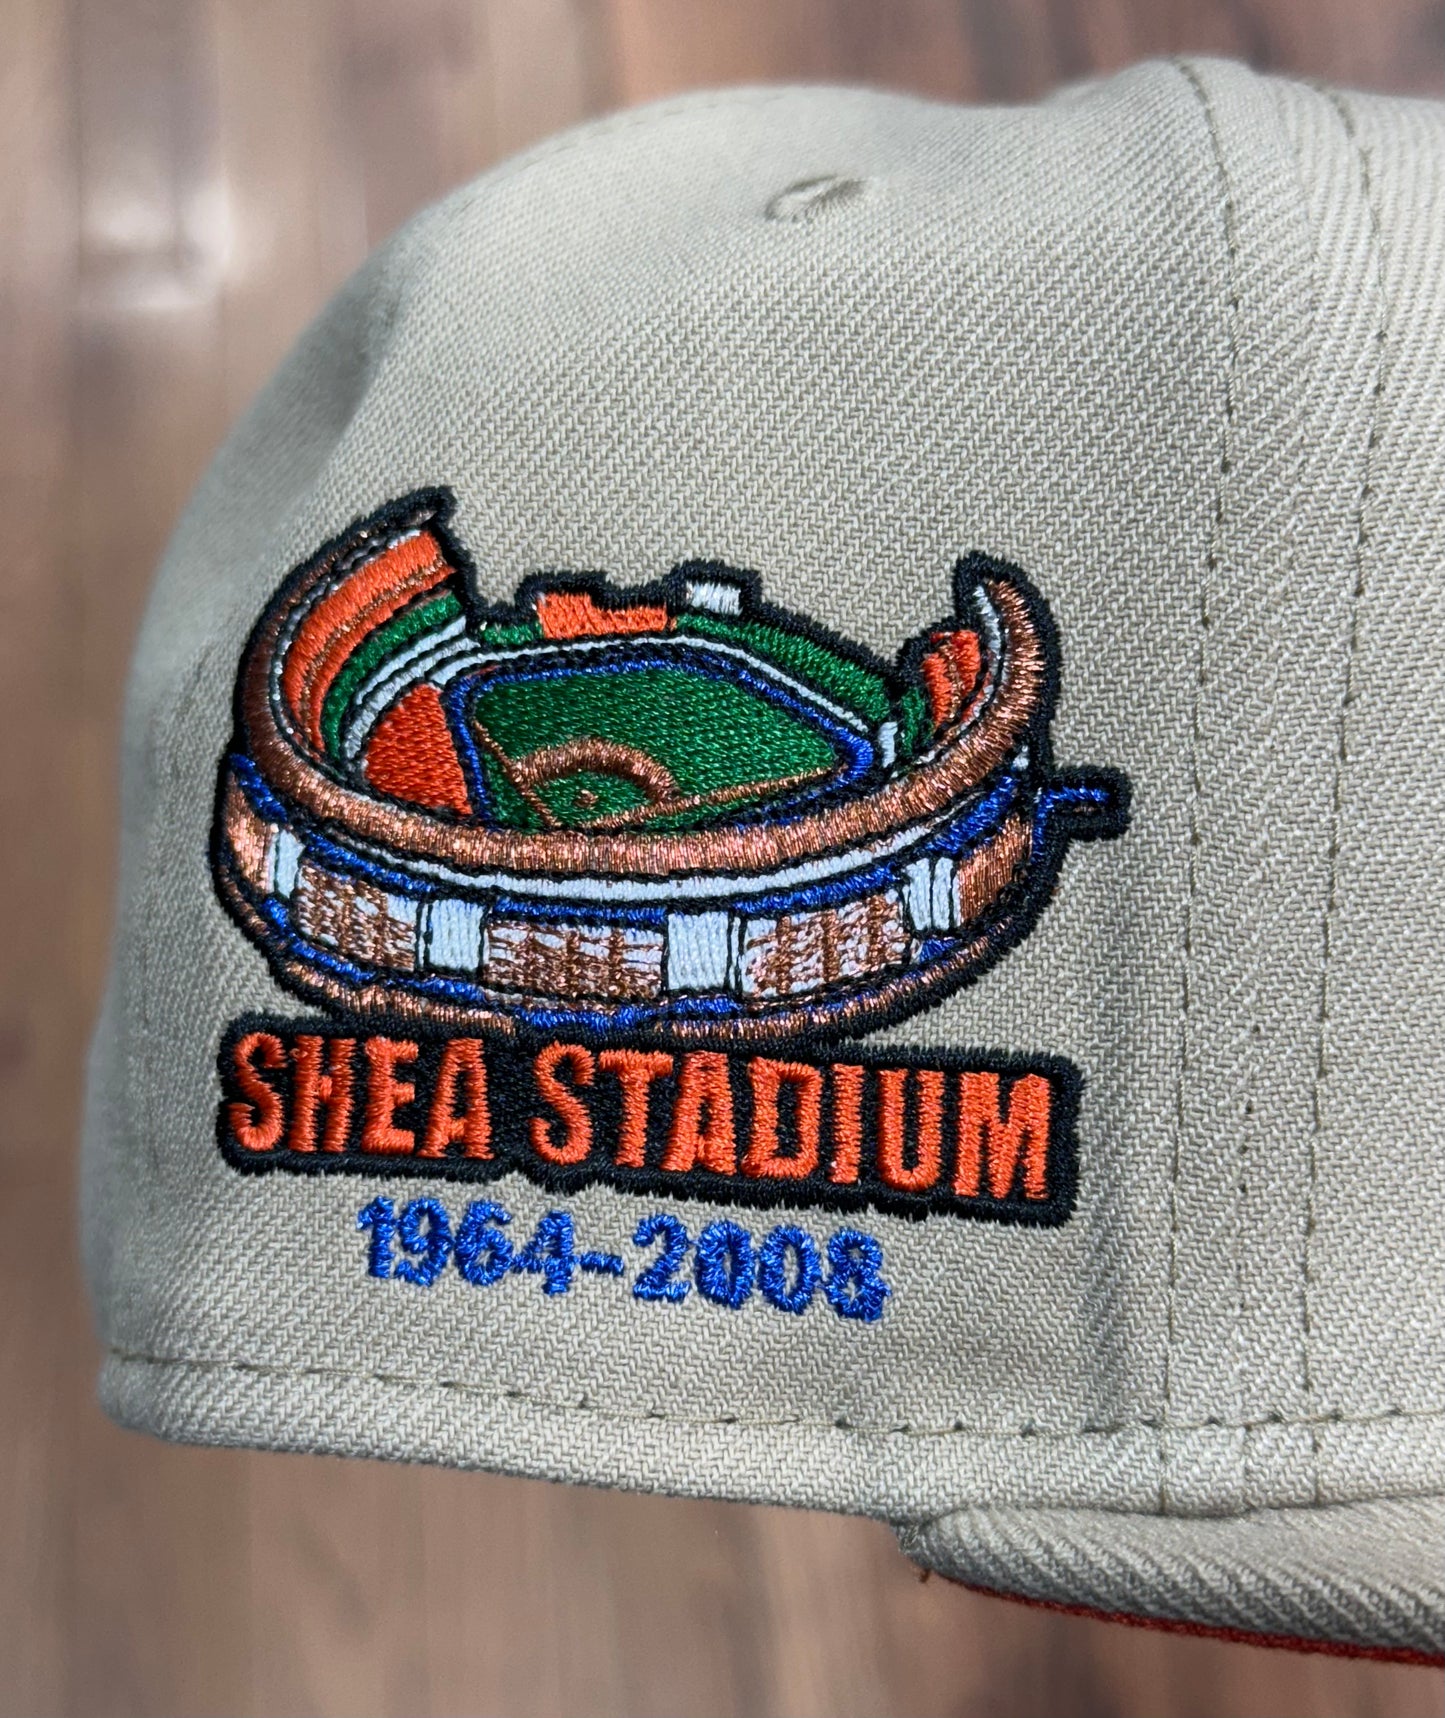 New York Mets Shea Stadium Ballpark Side Patch Fitted Hat New Era 5950 (Camel/Orange/Black/Blue/Copper)